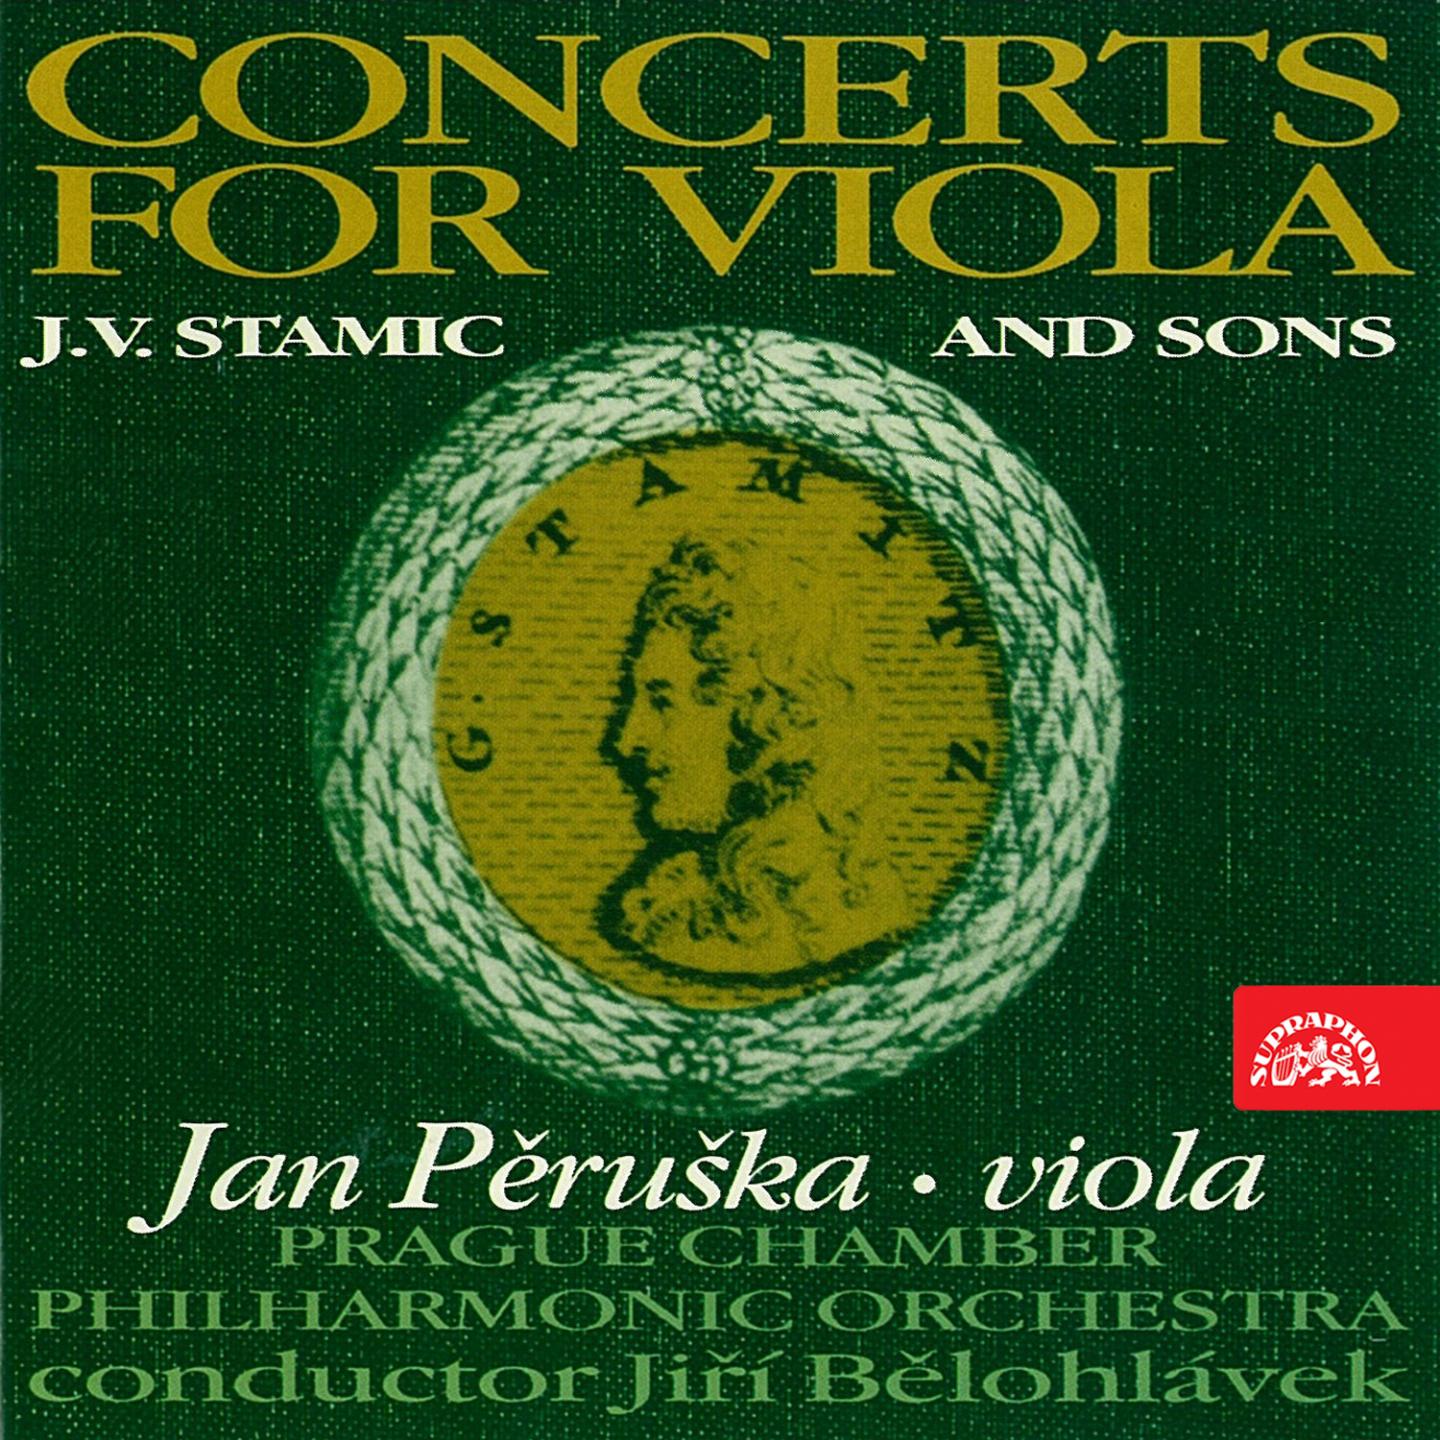 Concerto for Viola and Orchestra in G Major: I. Allegro